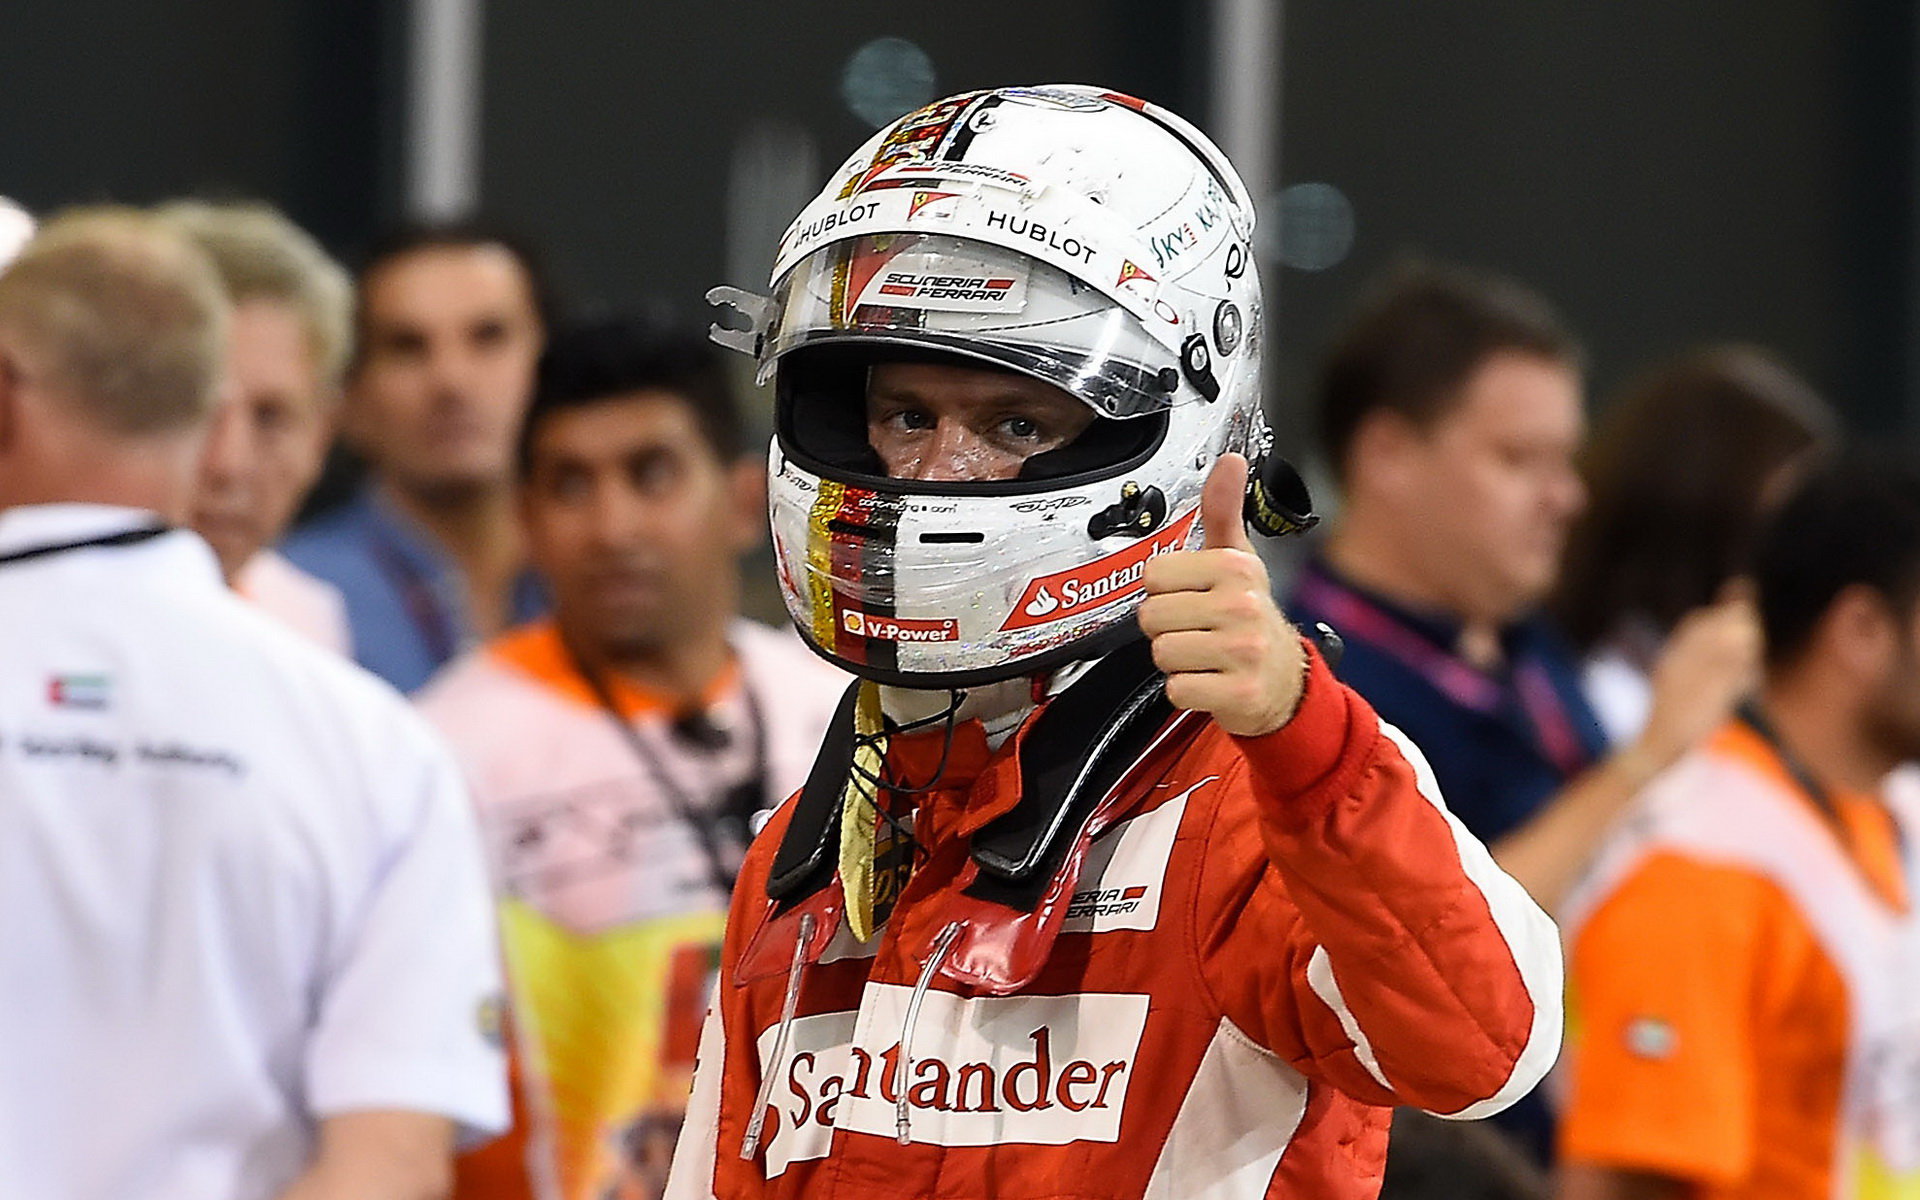 Sebastian Vettel v Abú Zabí